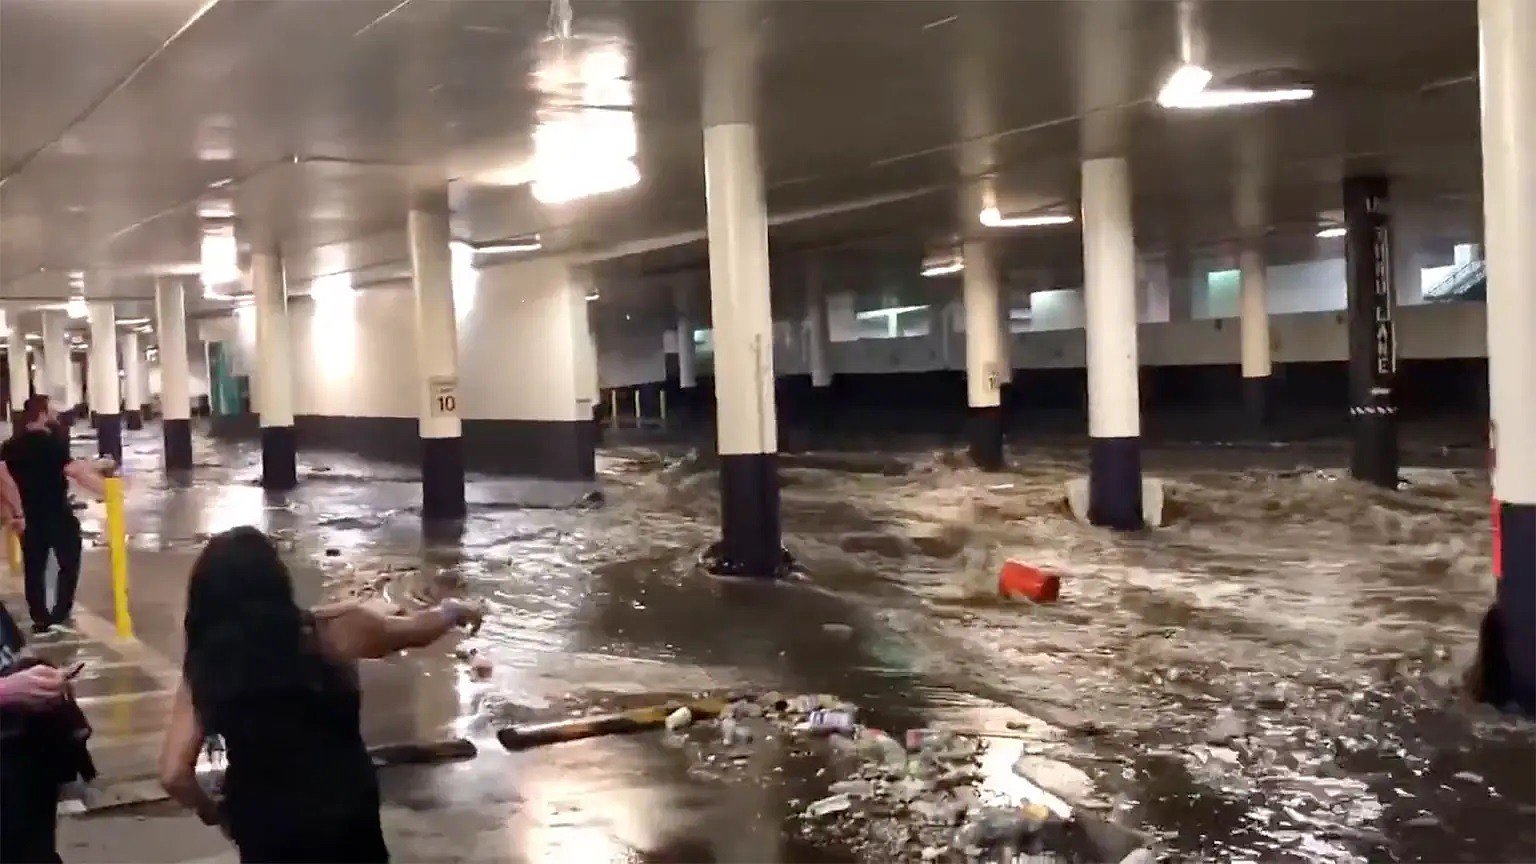 Storm water floods the Linq Hotel garage